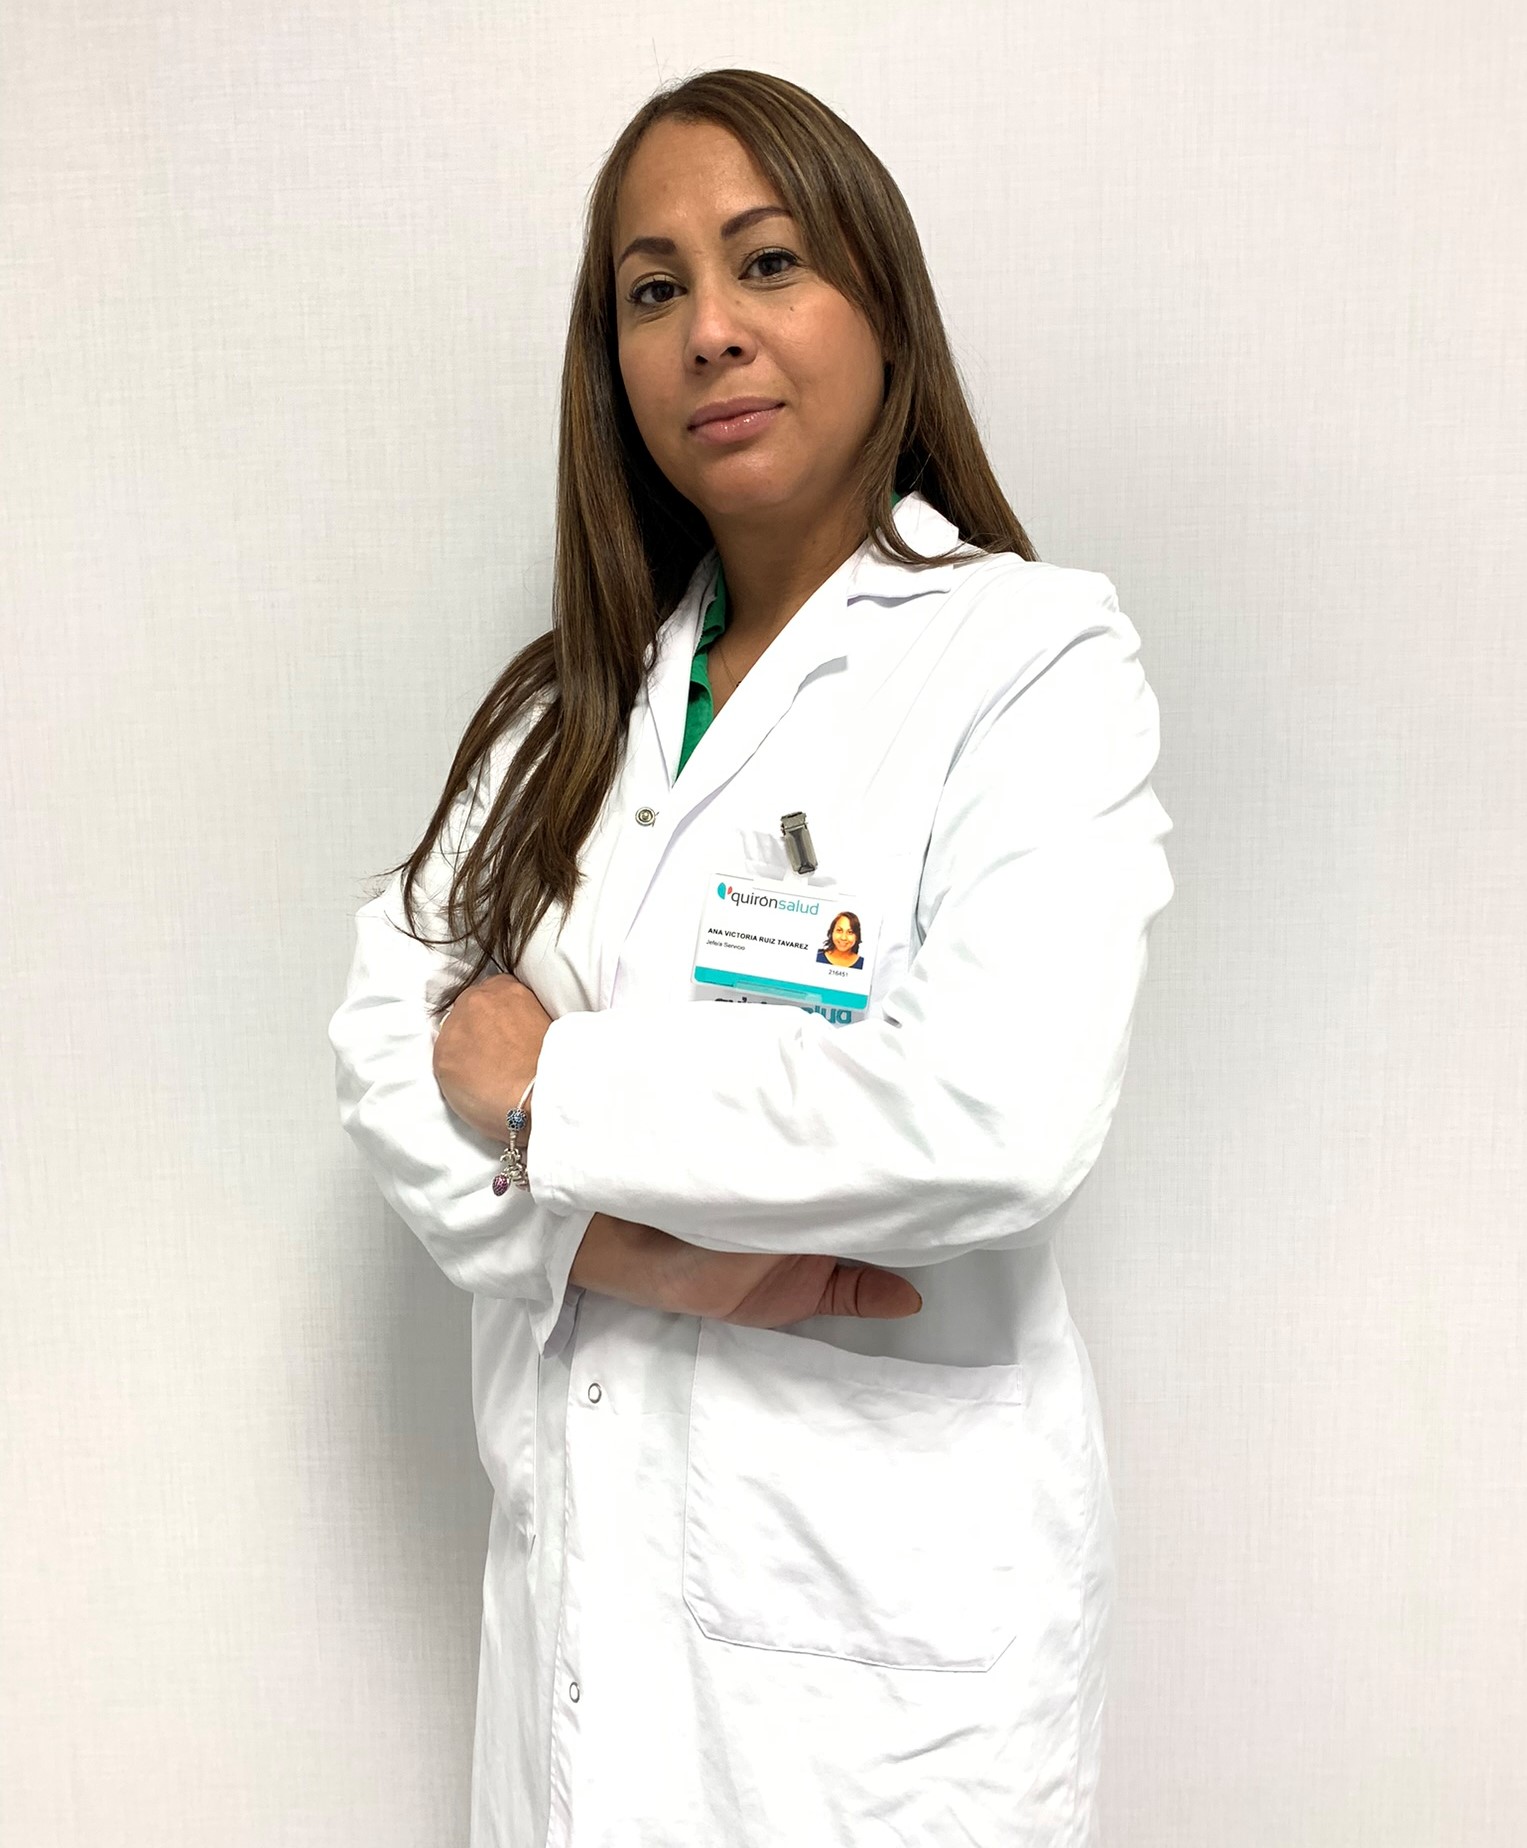 Ana Victoria Ruiz Tavarez | Hospital Quirónsalud Valle del Henares